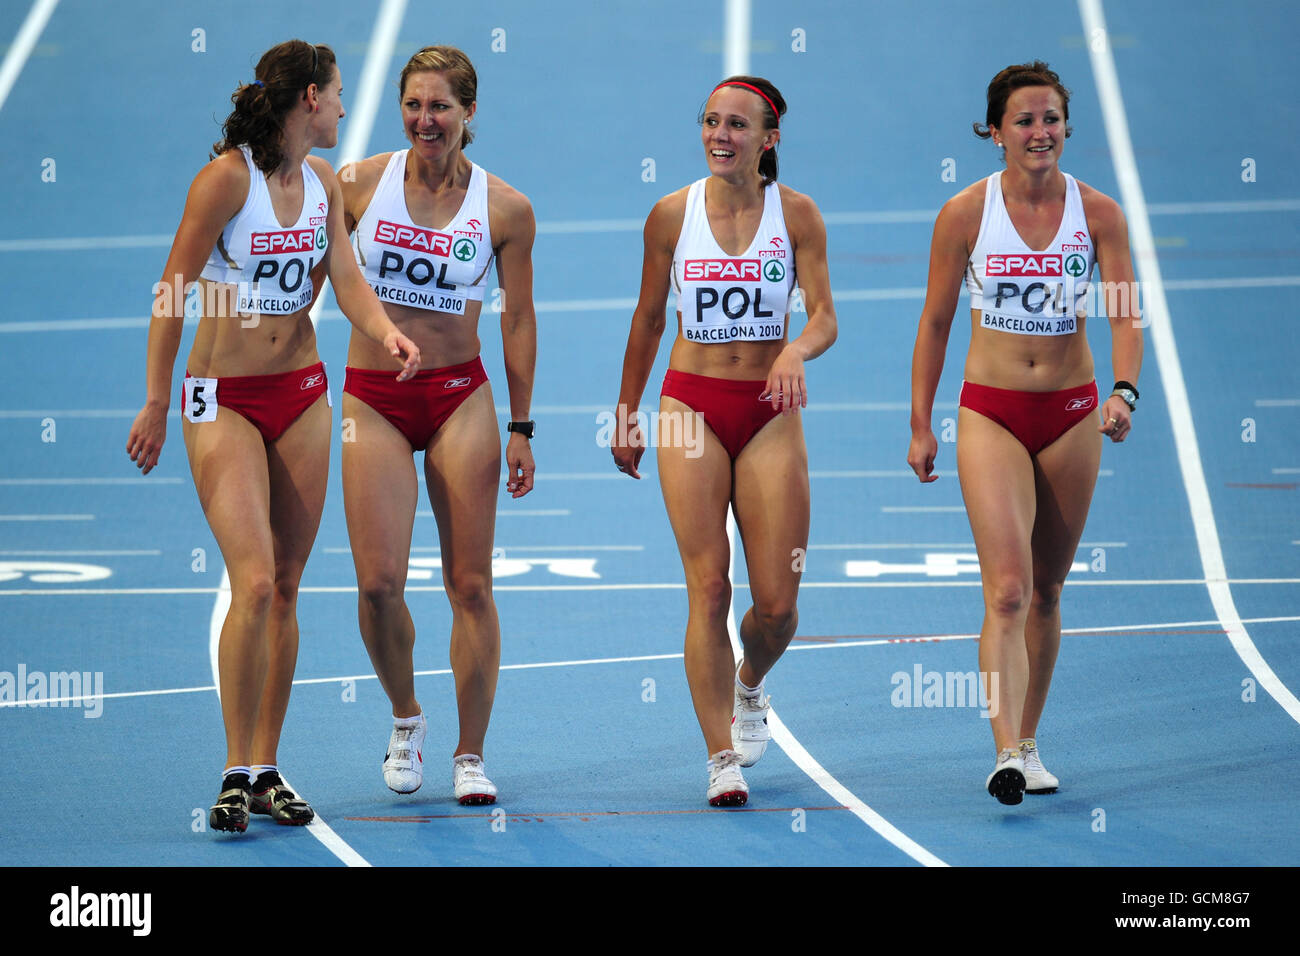 Athletics - IAAF European Championships 2010 - Day Six - Olympic Stadium. Poland's Marika Popowicz, Daria Korczynska, Marta Jeschke and Weronika Wedler after winning bronze in the women's 100m relay Stock Photo